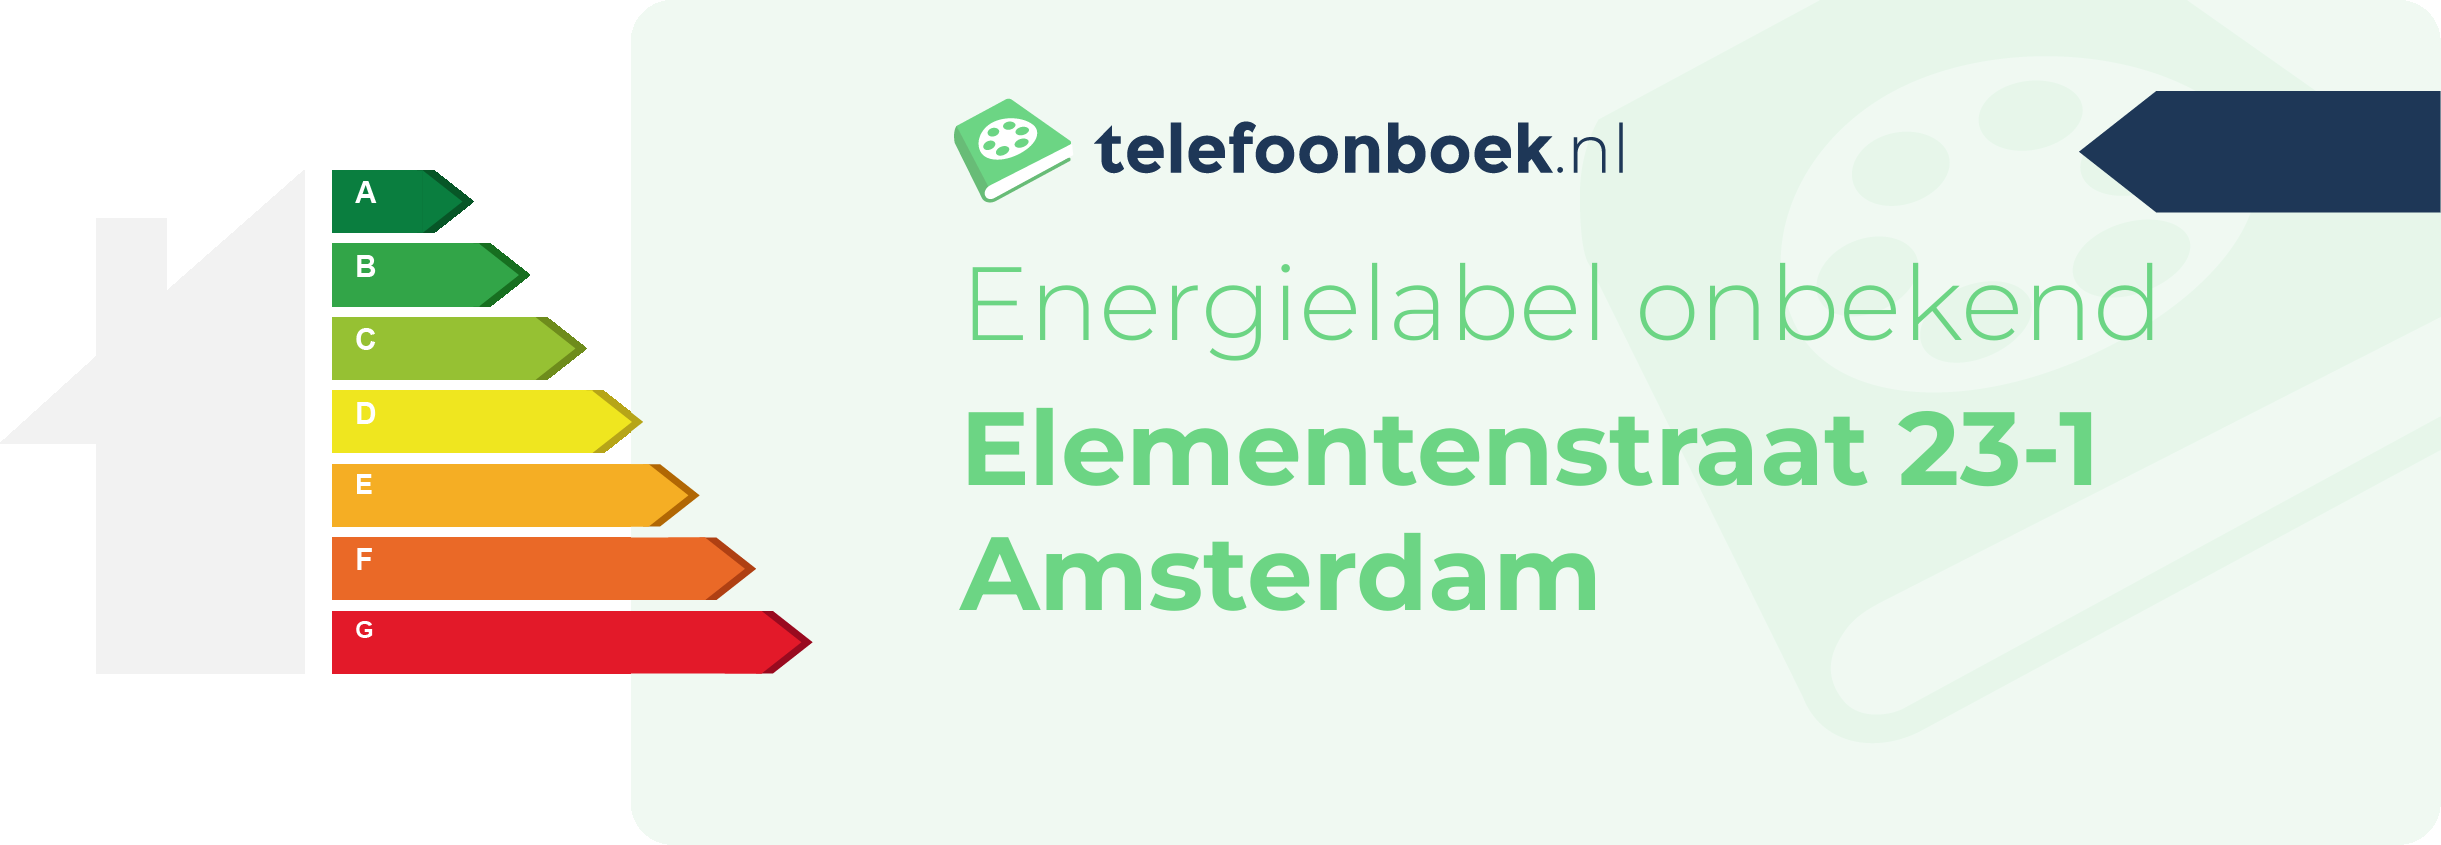 Energielabel Elementenstraat 23-1 Amsterdam